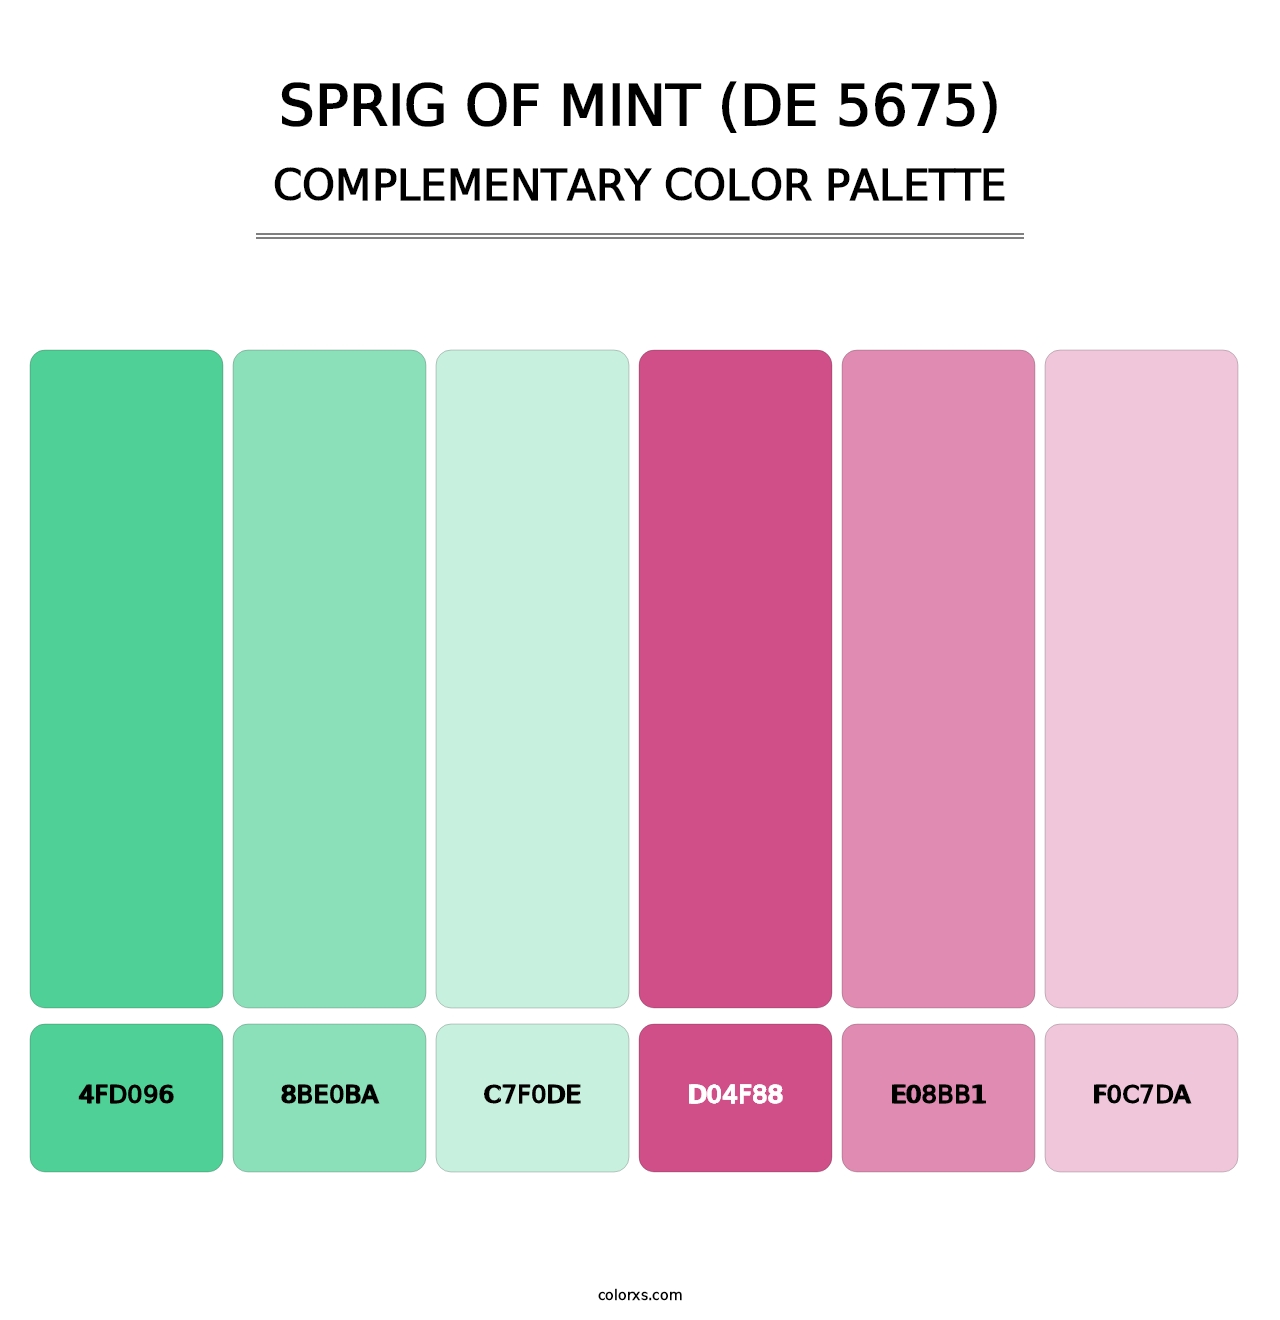 Sprig of Mint (DE 5675) - Complementary Color Palette